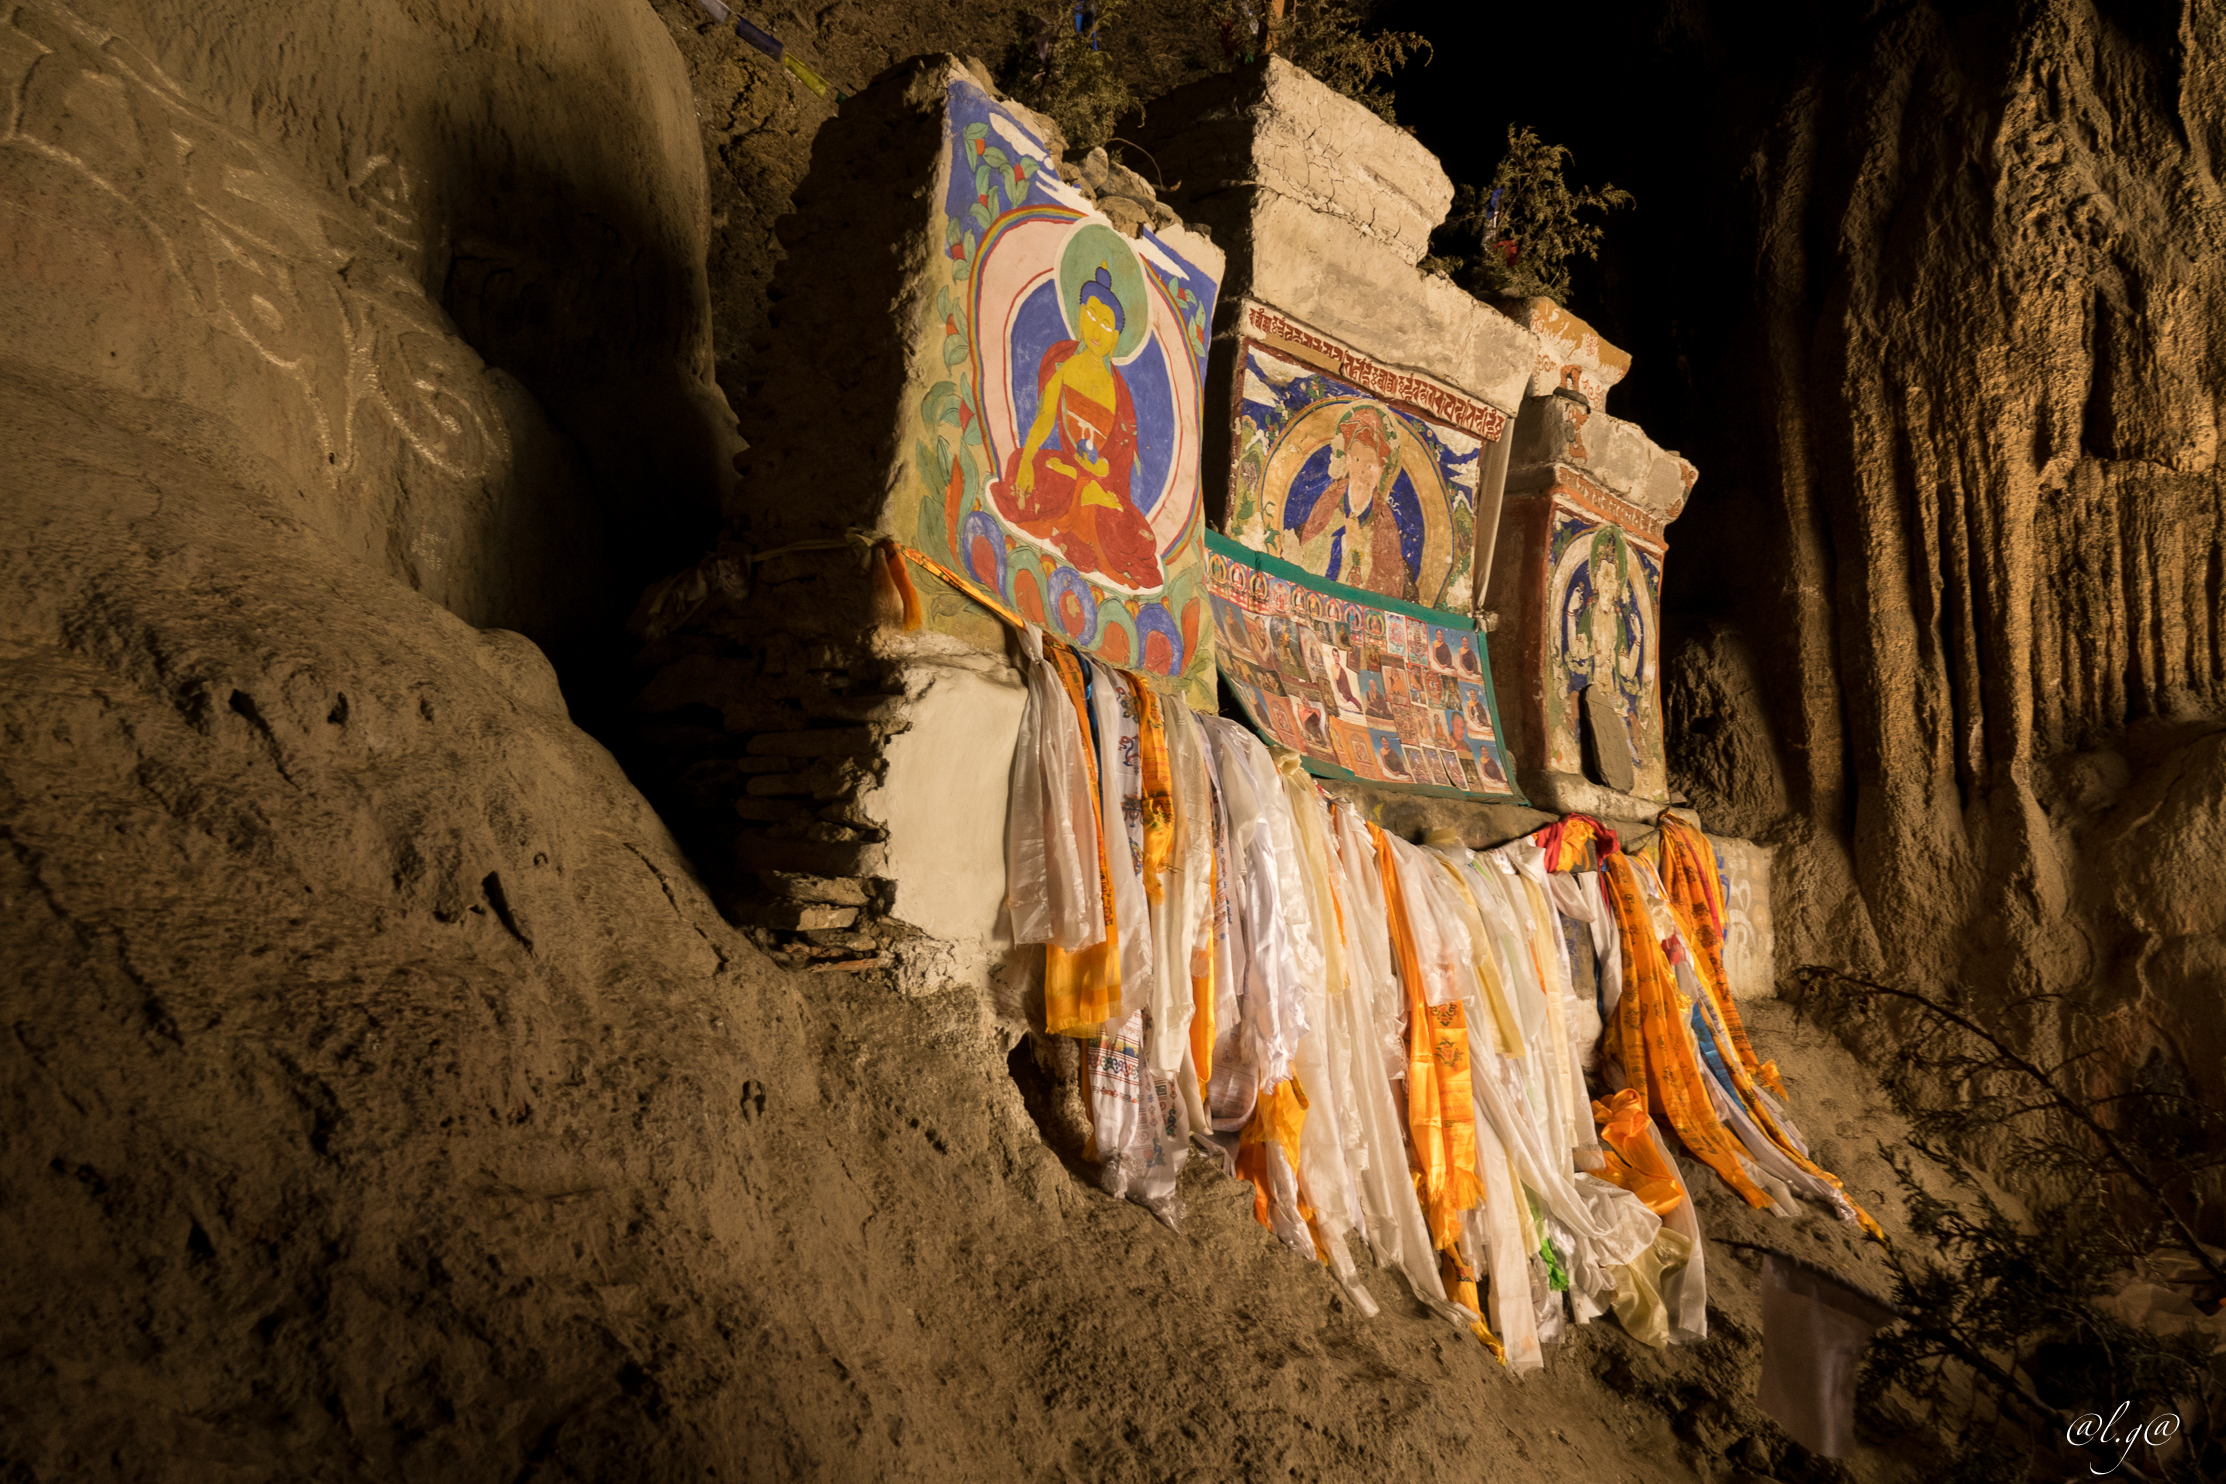 Chungsi Cave (3440m) : Grotte ayant accueilli Padma Sambhava dit Guru Rimpoche